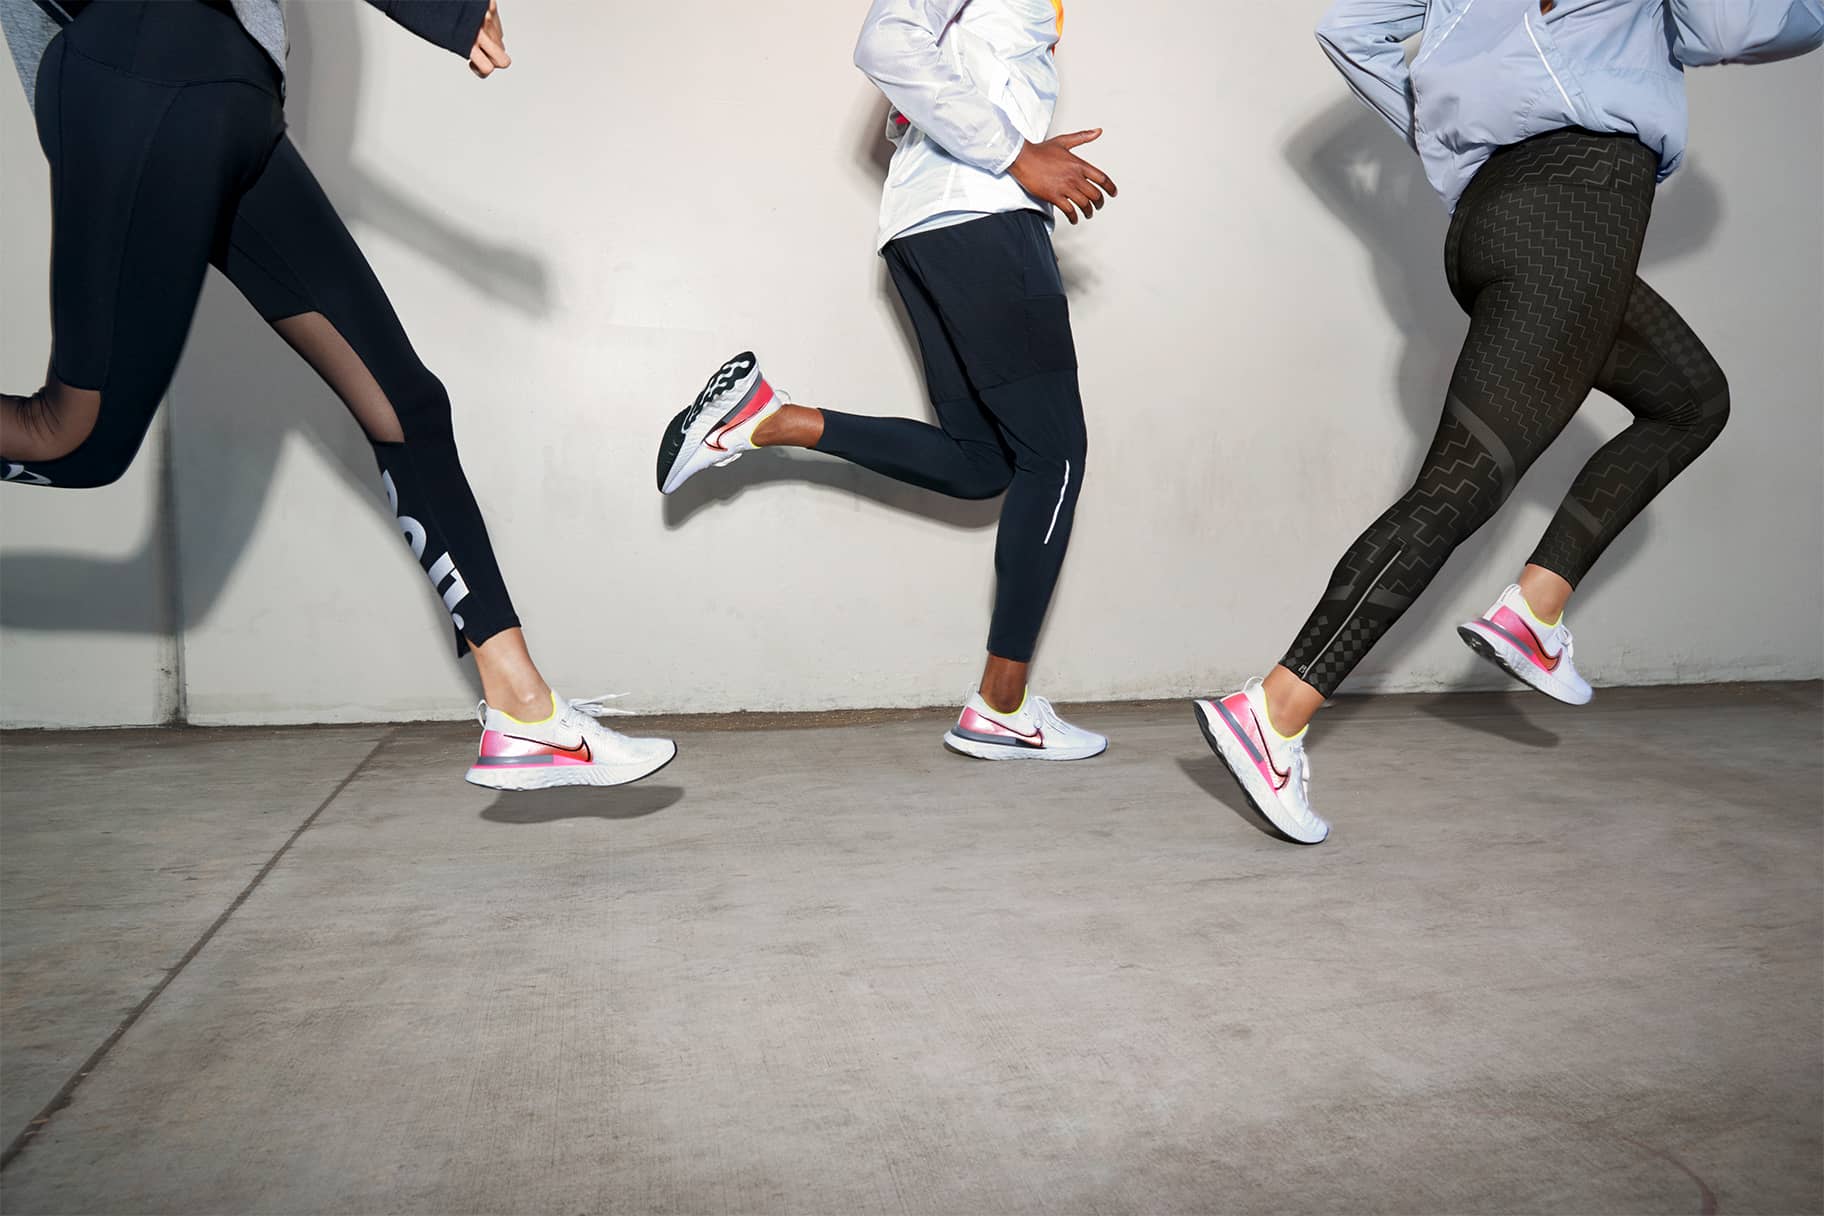 Hoe vind je de beste legging van Nike om in te hardlopen?